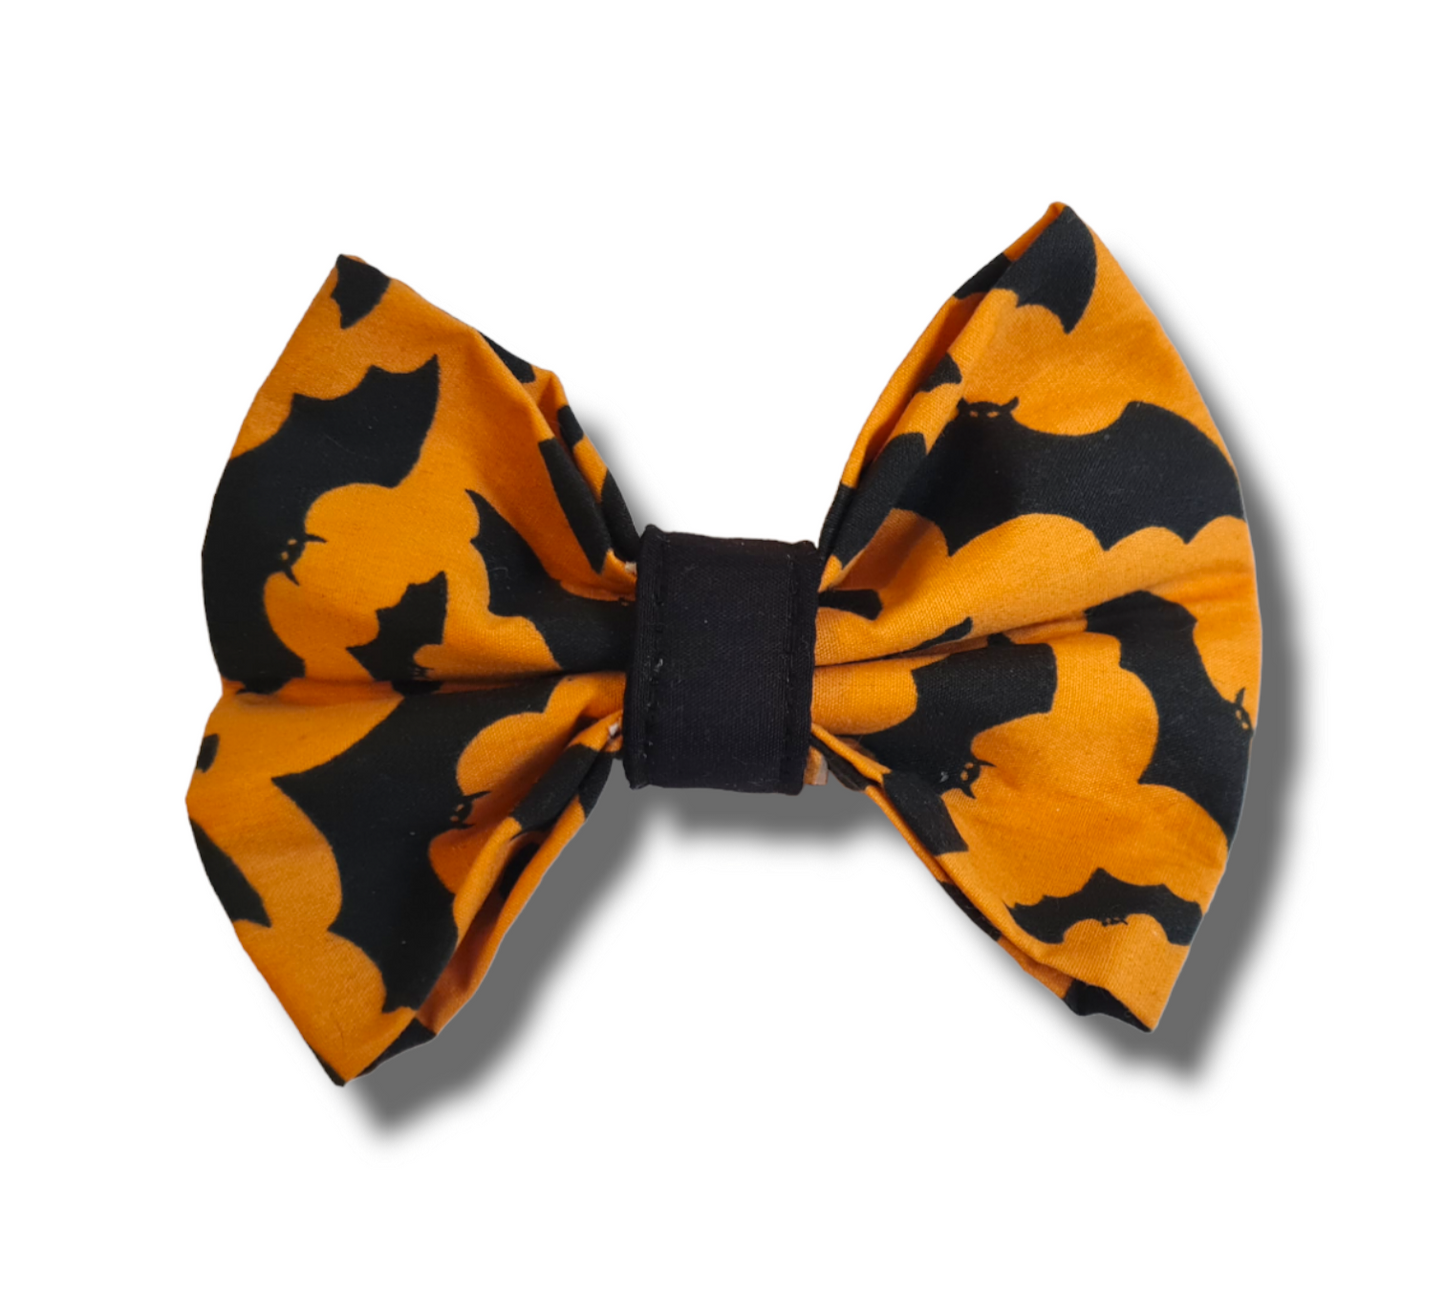 Spooktacular Halloween bow tie